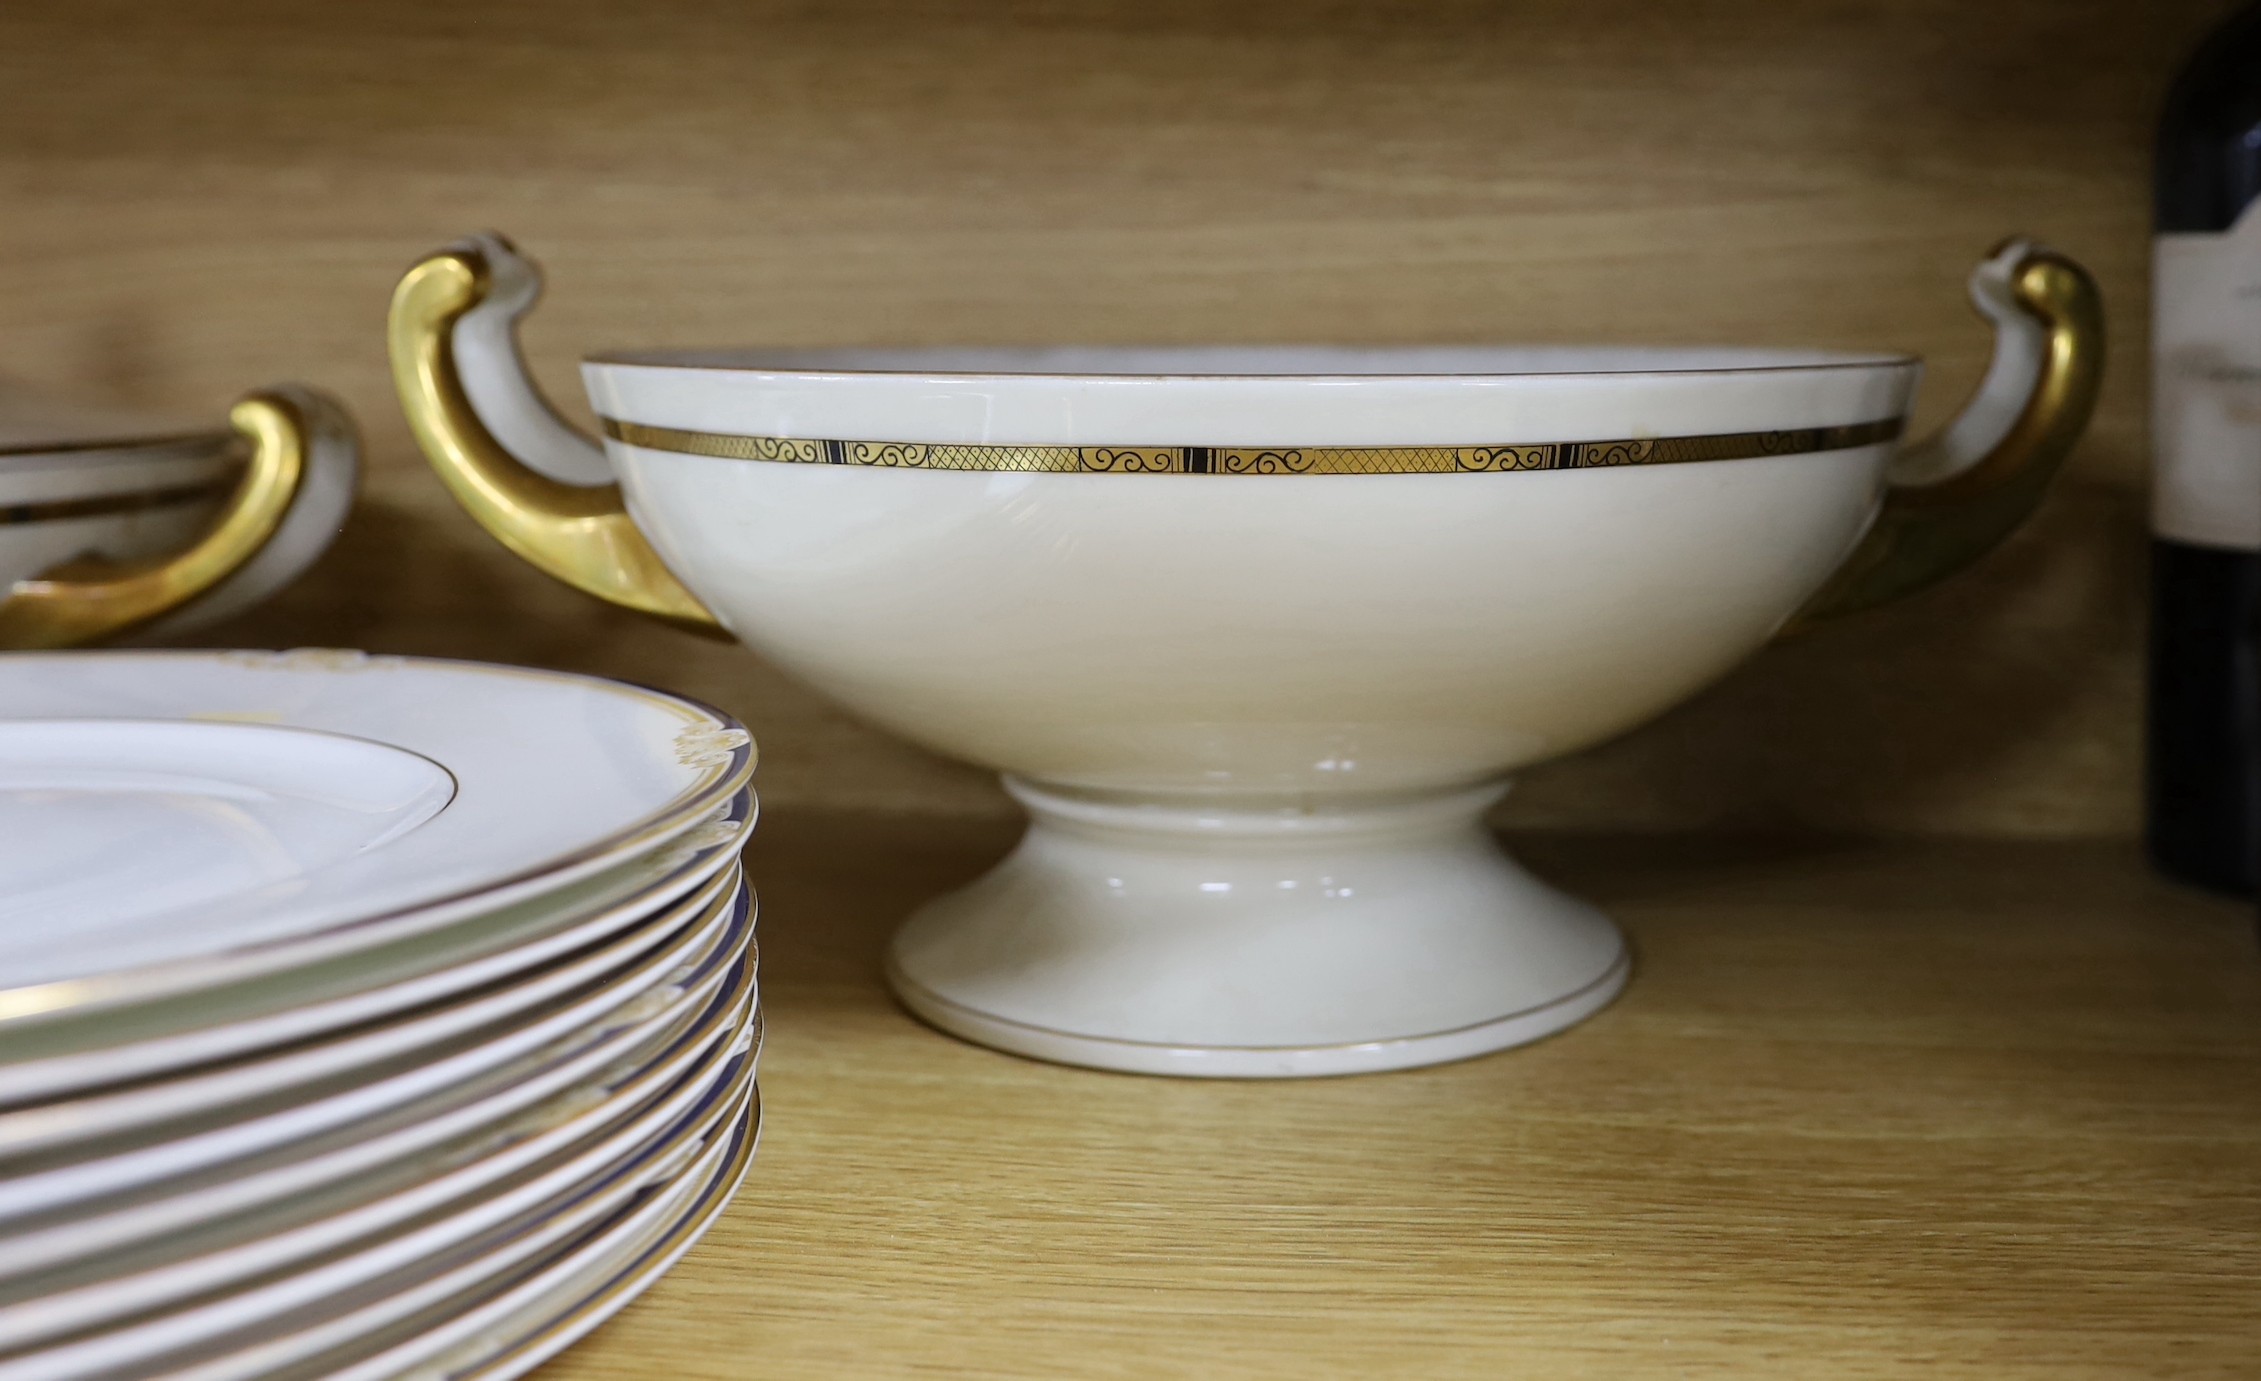 Ten Wedgwood Cavendish dinner plates and two Bavarian porcelain tureens